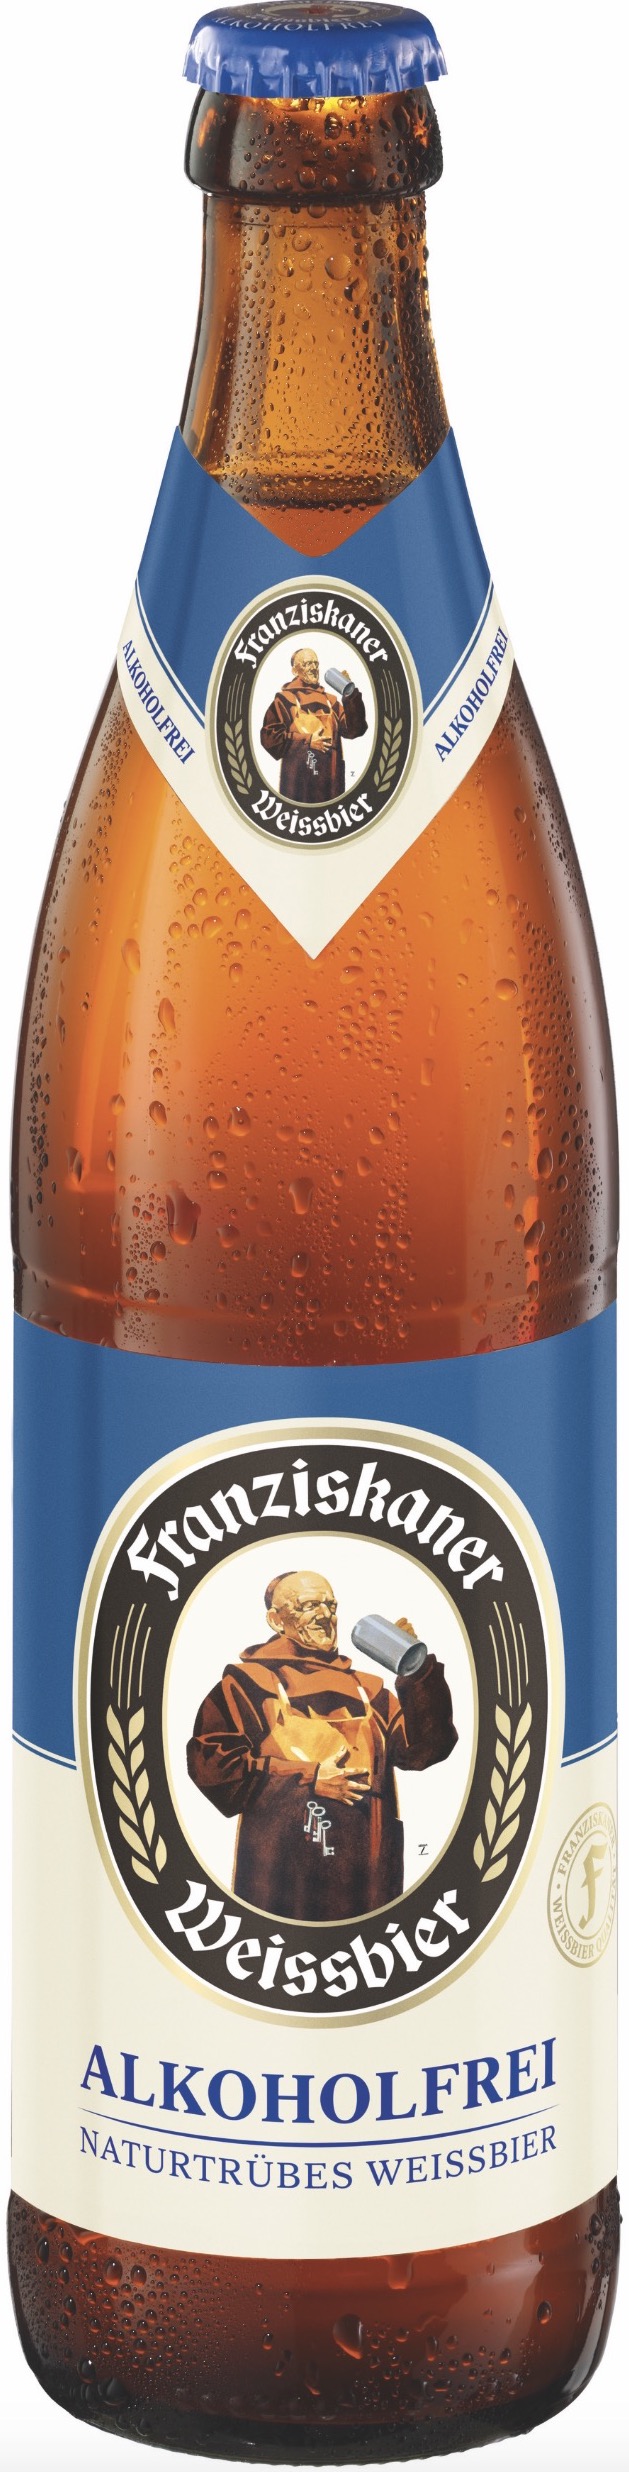 Franziskaner Weissbier Alkoholfrei 0,5L MEHRWEG